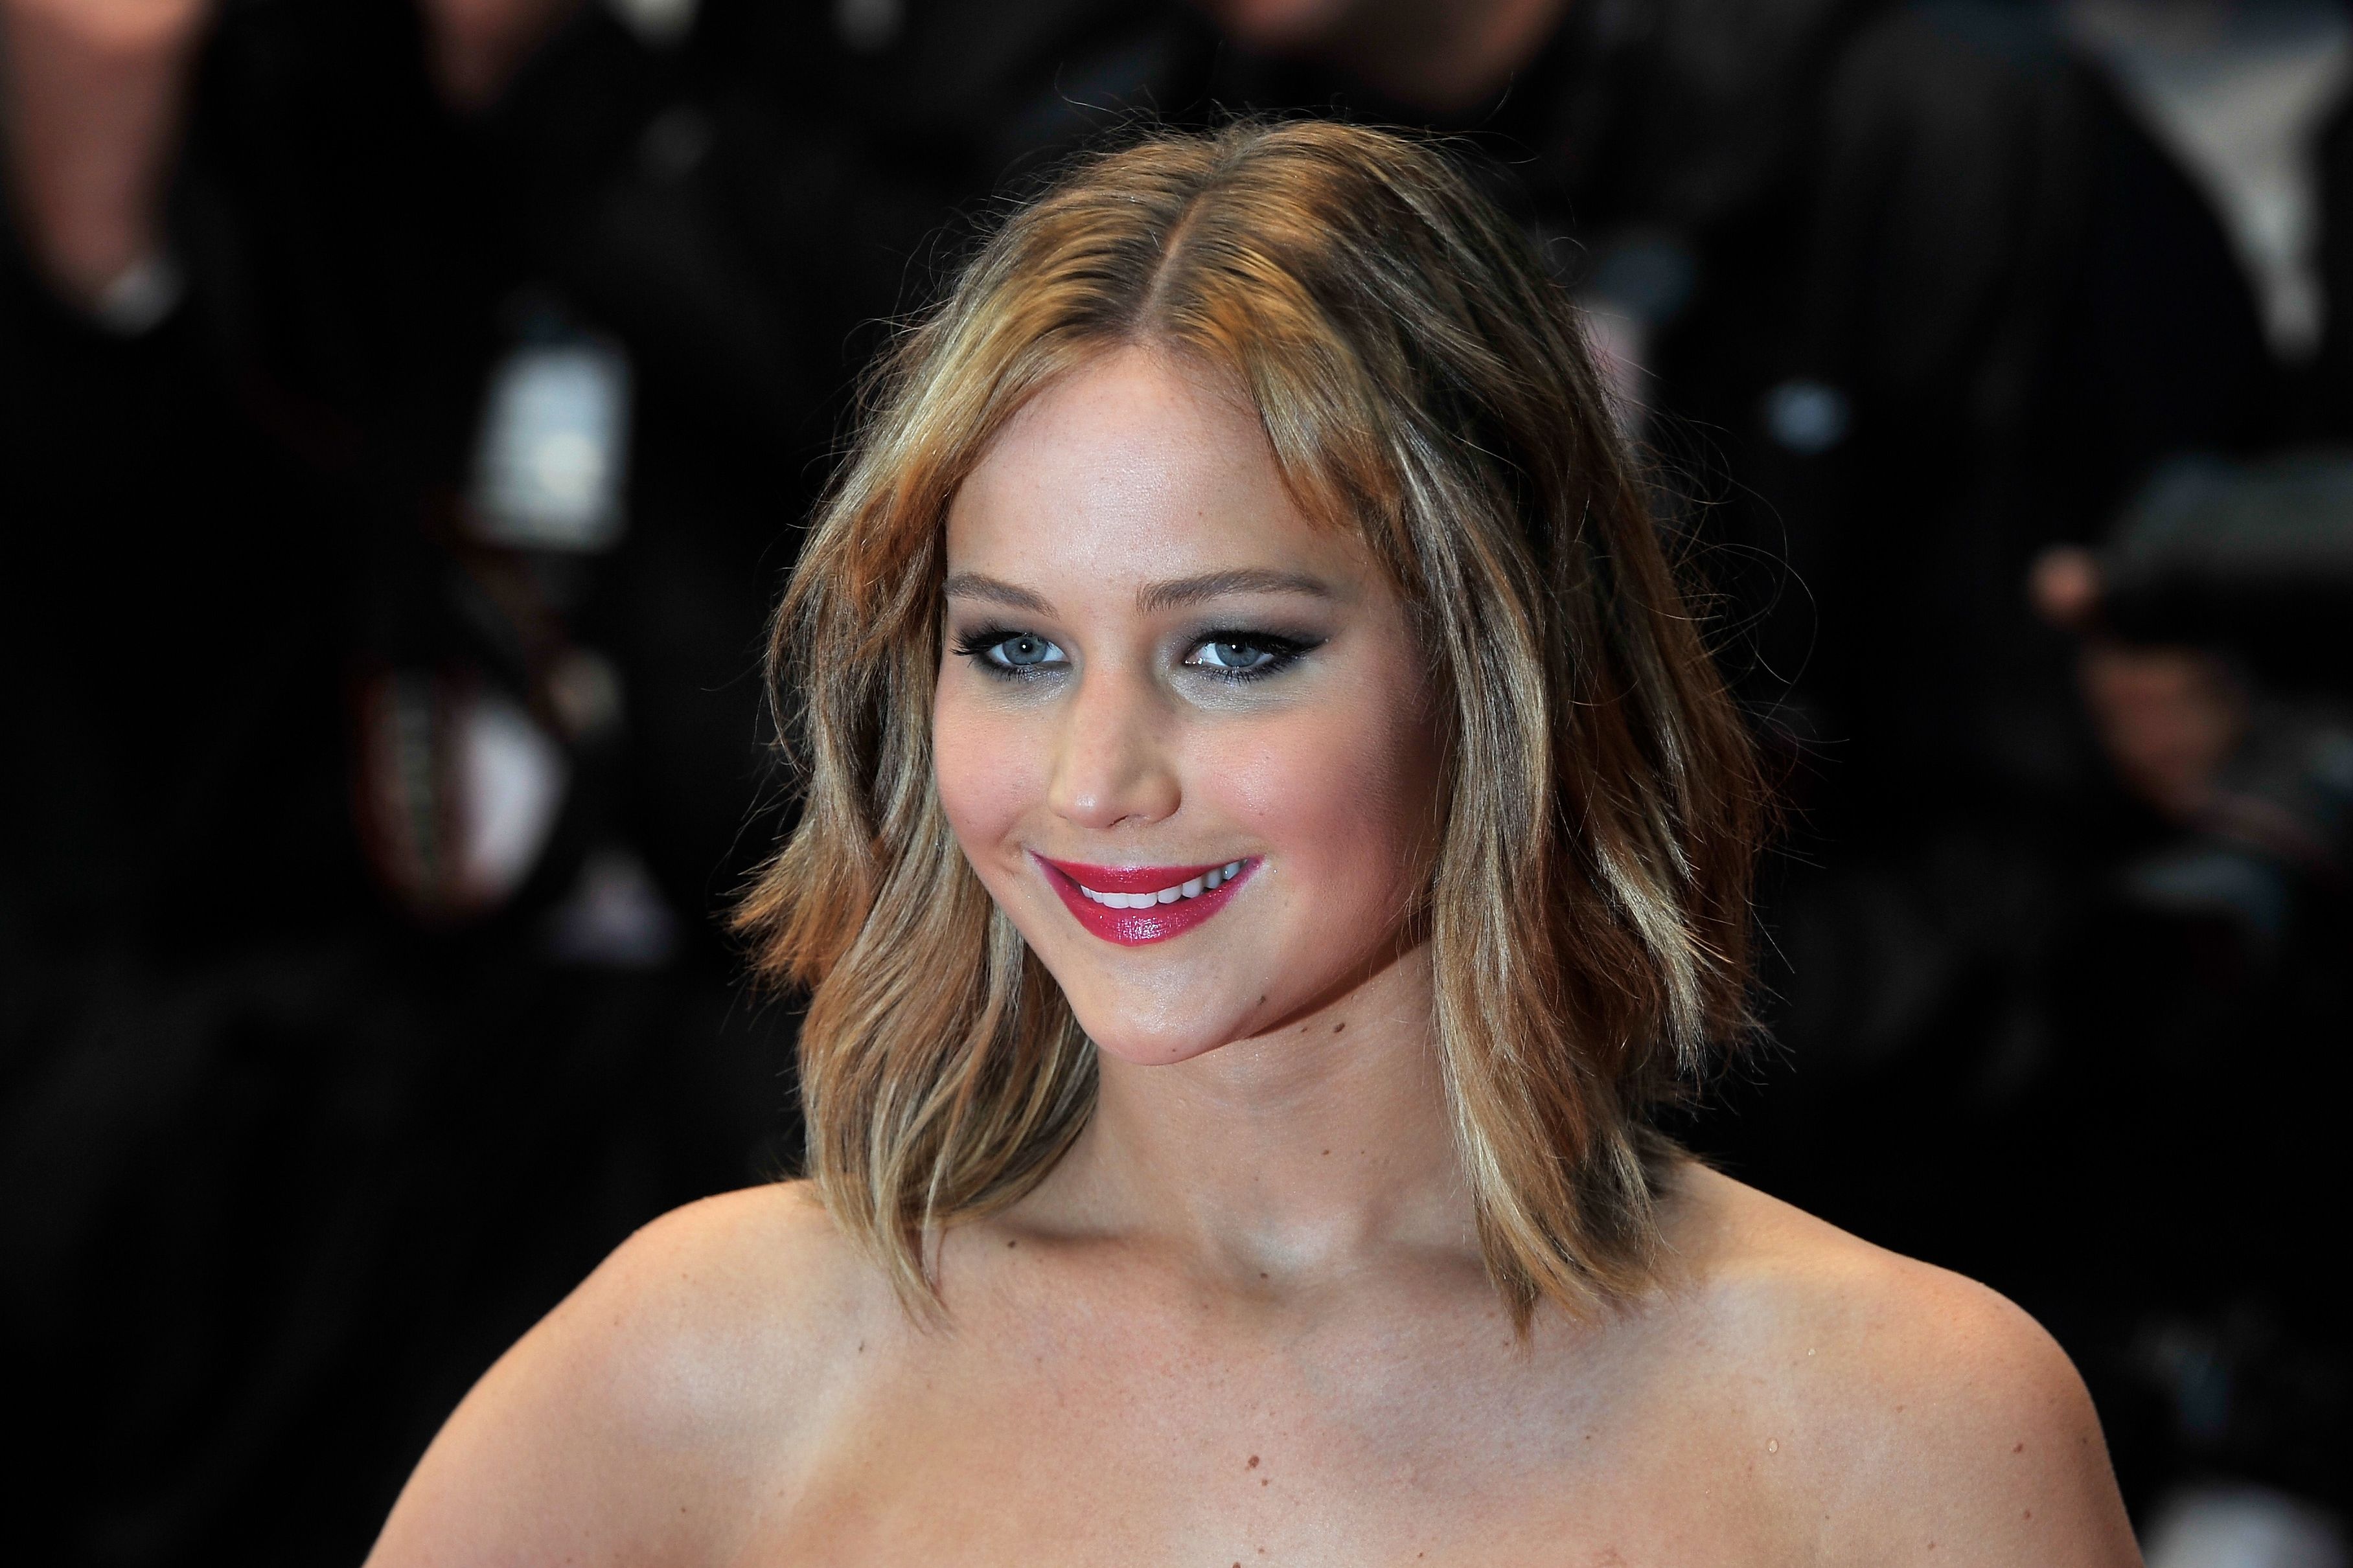 Nude photo hack isn't Jennifer Lawrence fault (Opinion) | CNN